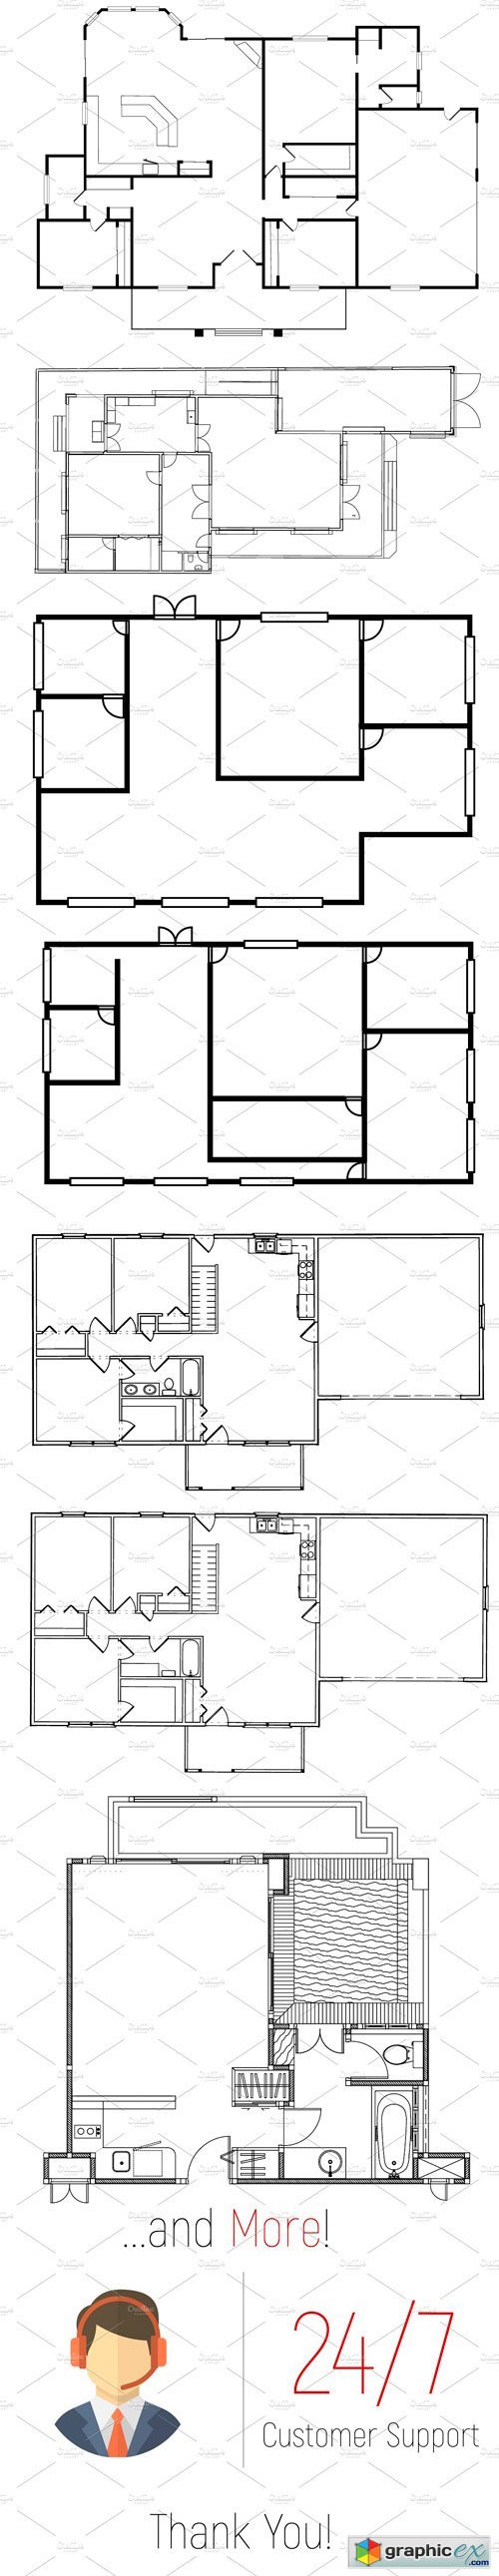 Architecture Floor Plan Builder Kit